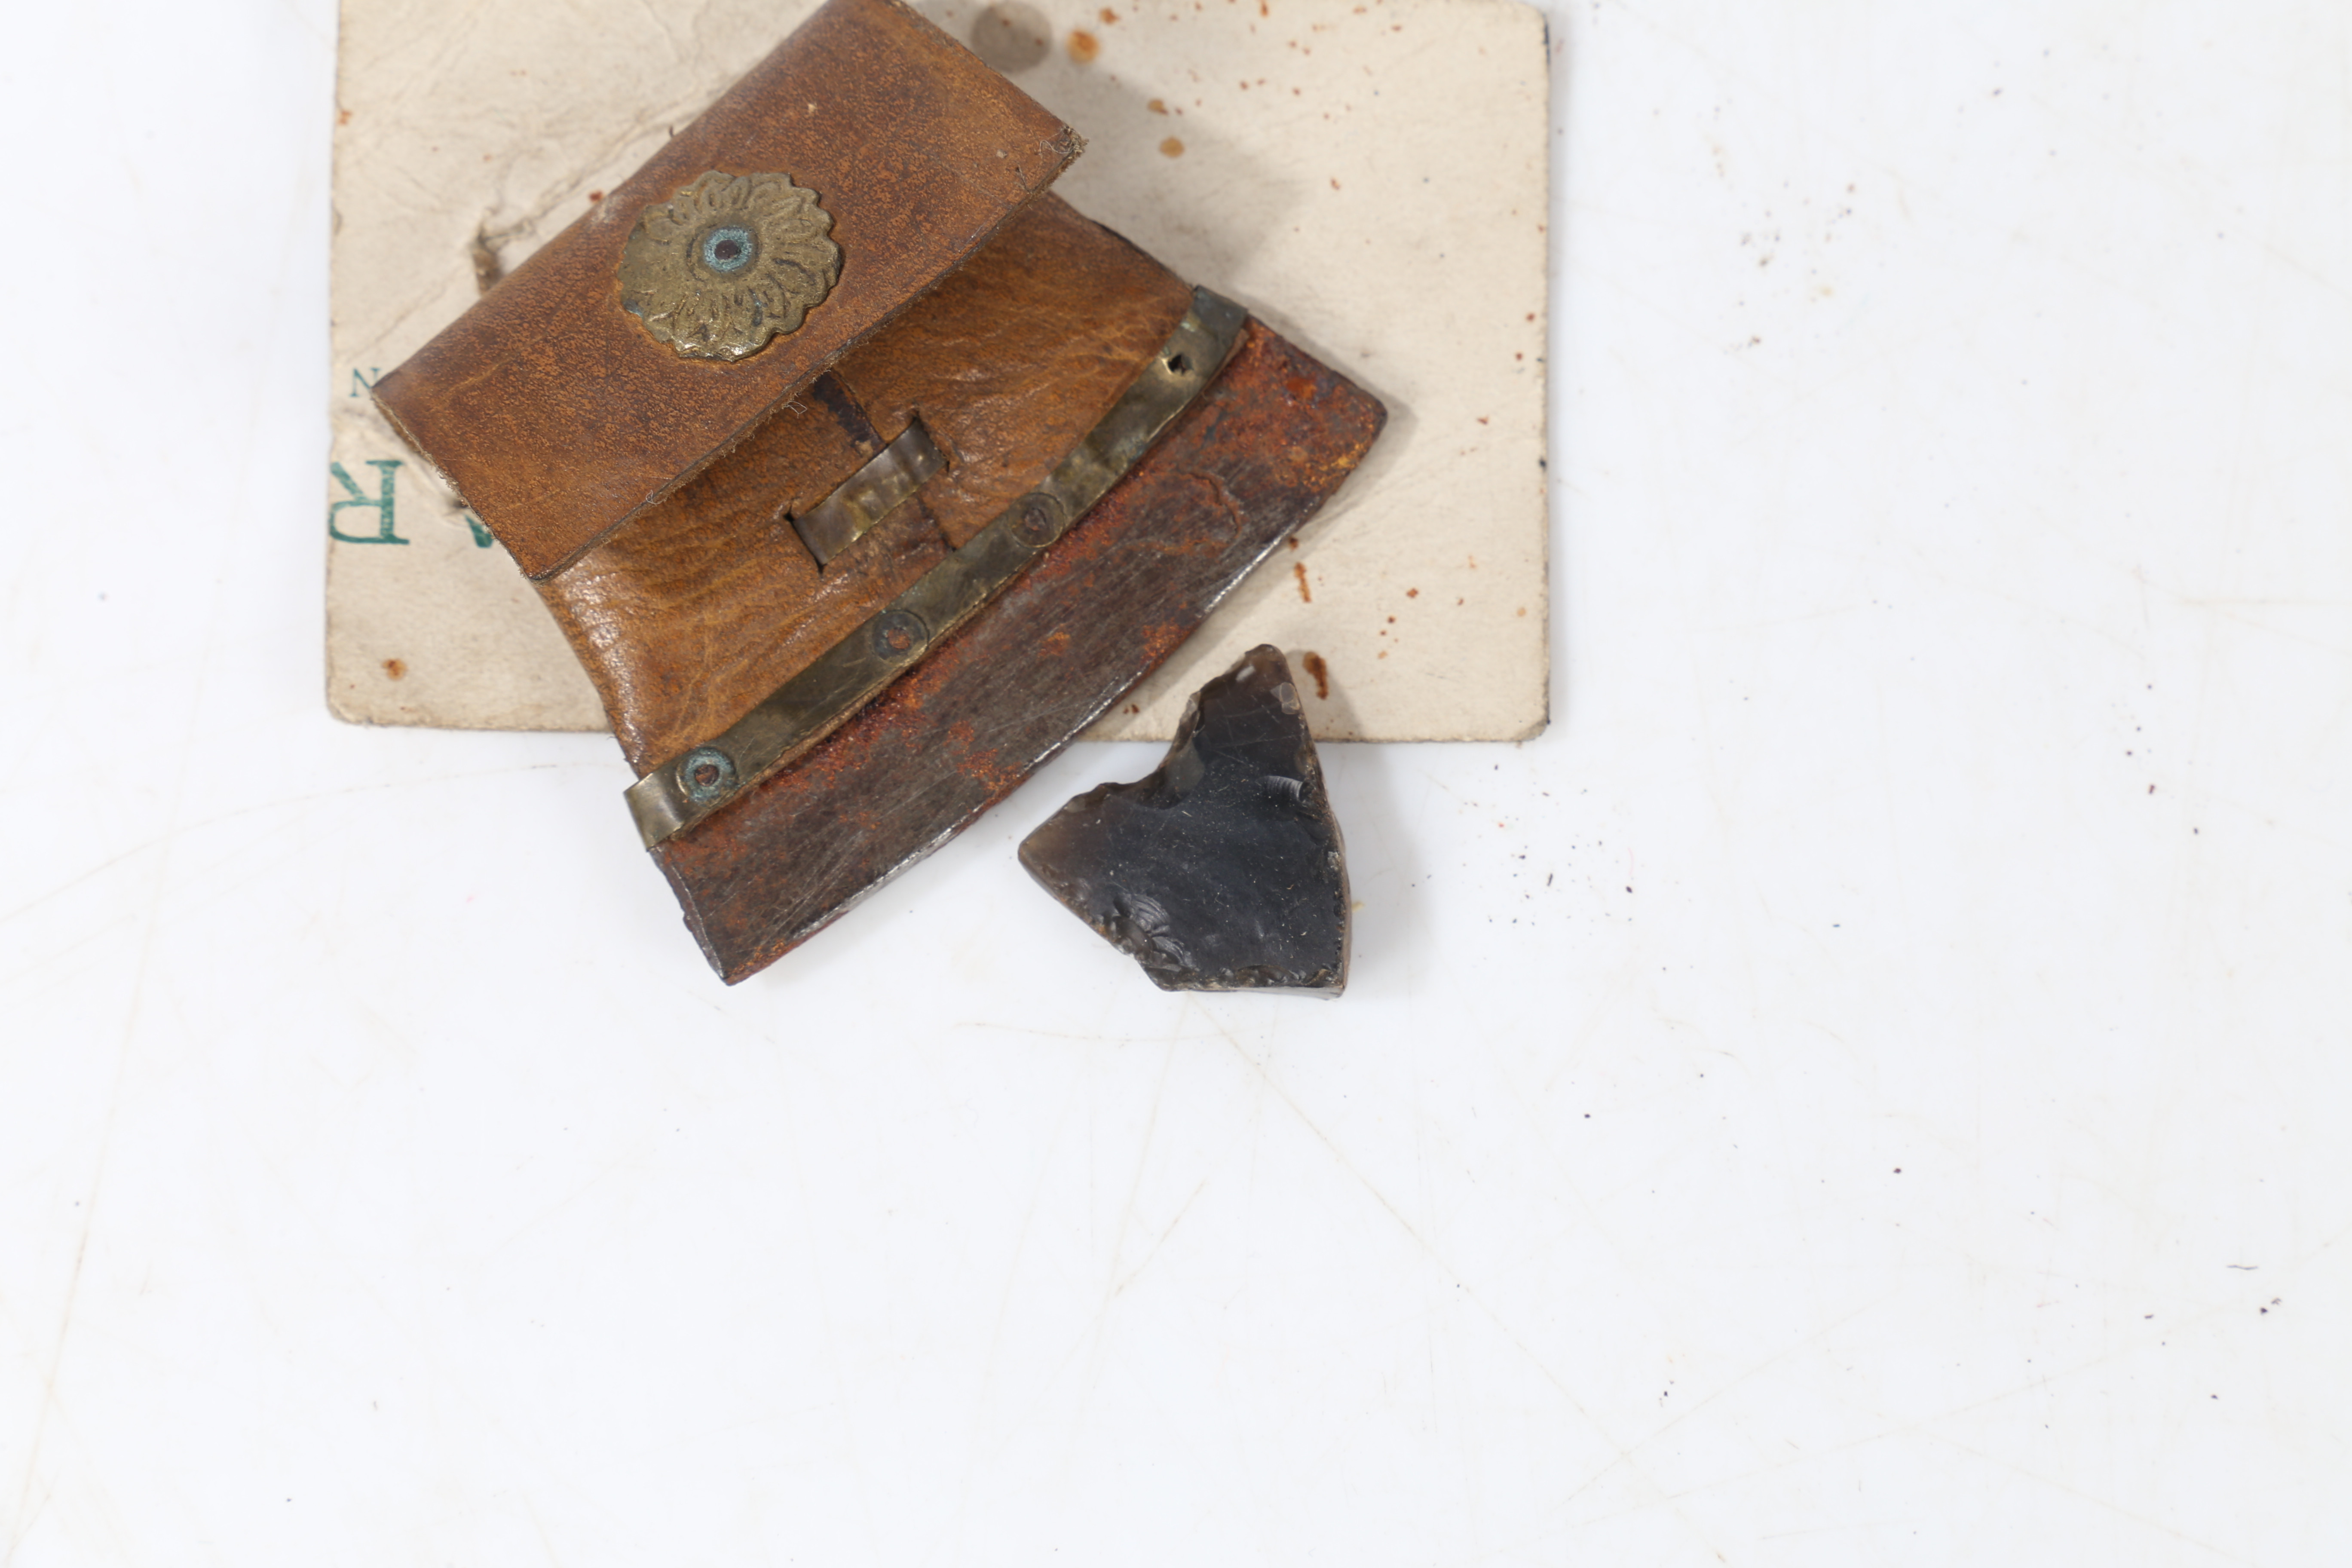 A CIRCA 1816 TIBETAN POCKET FLINT AND STEEL. - Image 3 of 4